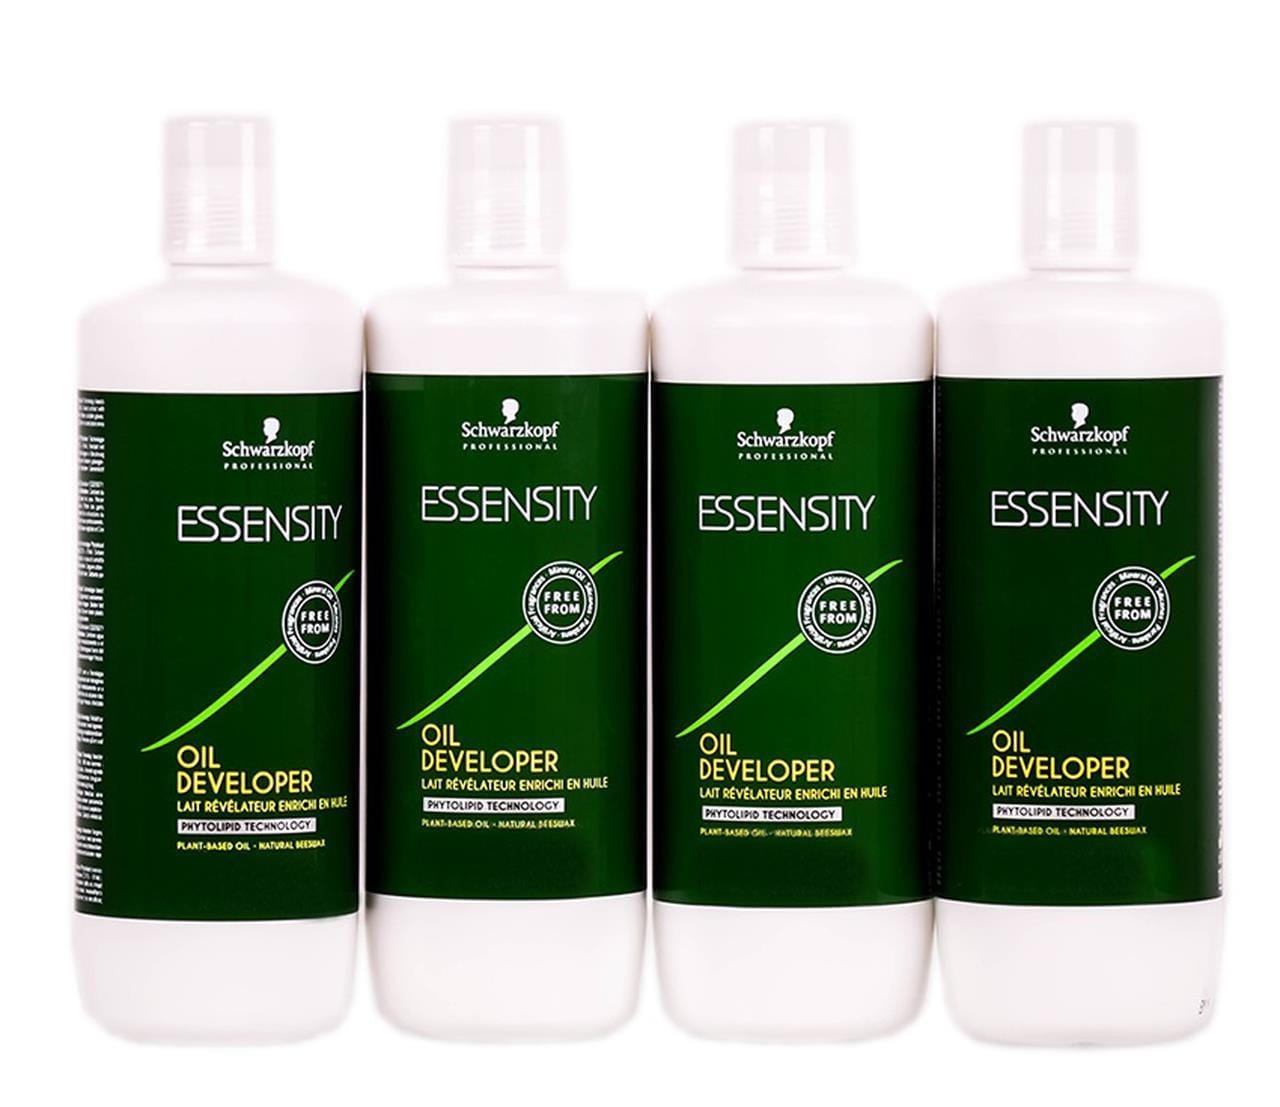 SCHWARZKOPF - ESSENSITY_Essensity Oil Developer 2.5%/8 Vol_Cosmetic World